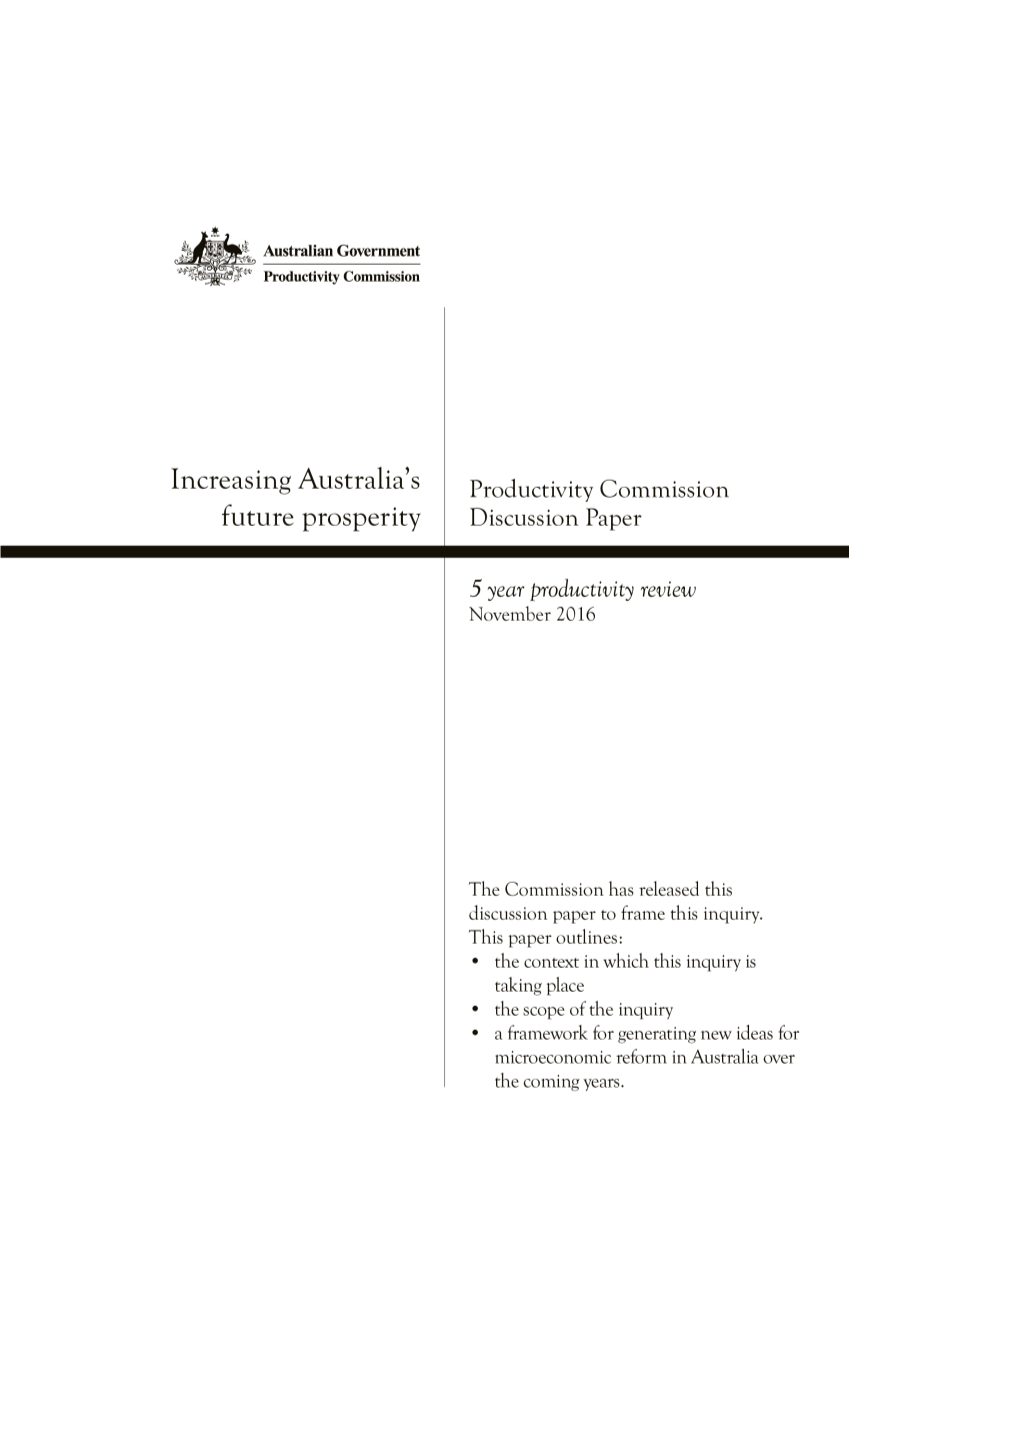 Increasing Australia's Future Prosperity - Discussion Paper - Productivity Review